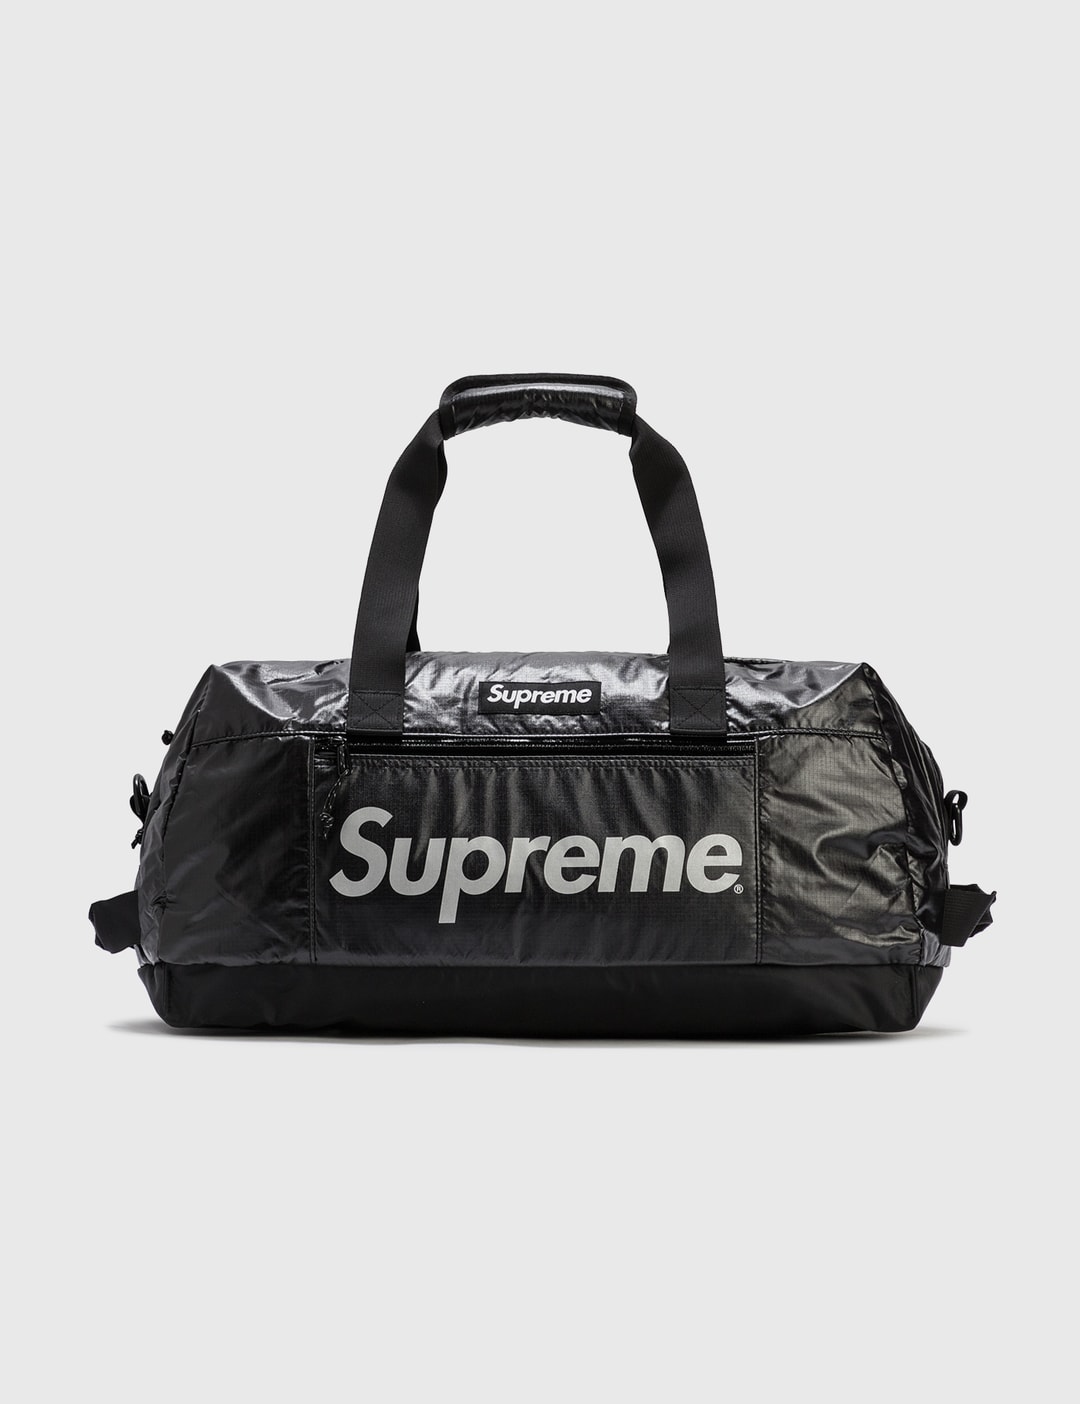 Supreme Duffle Bag Black